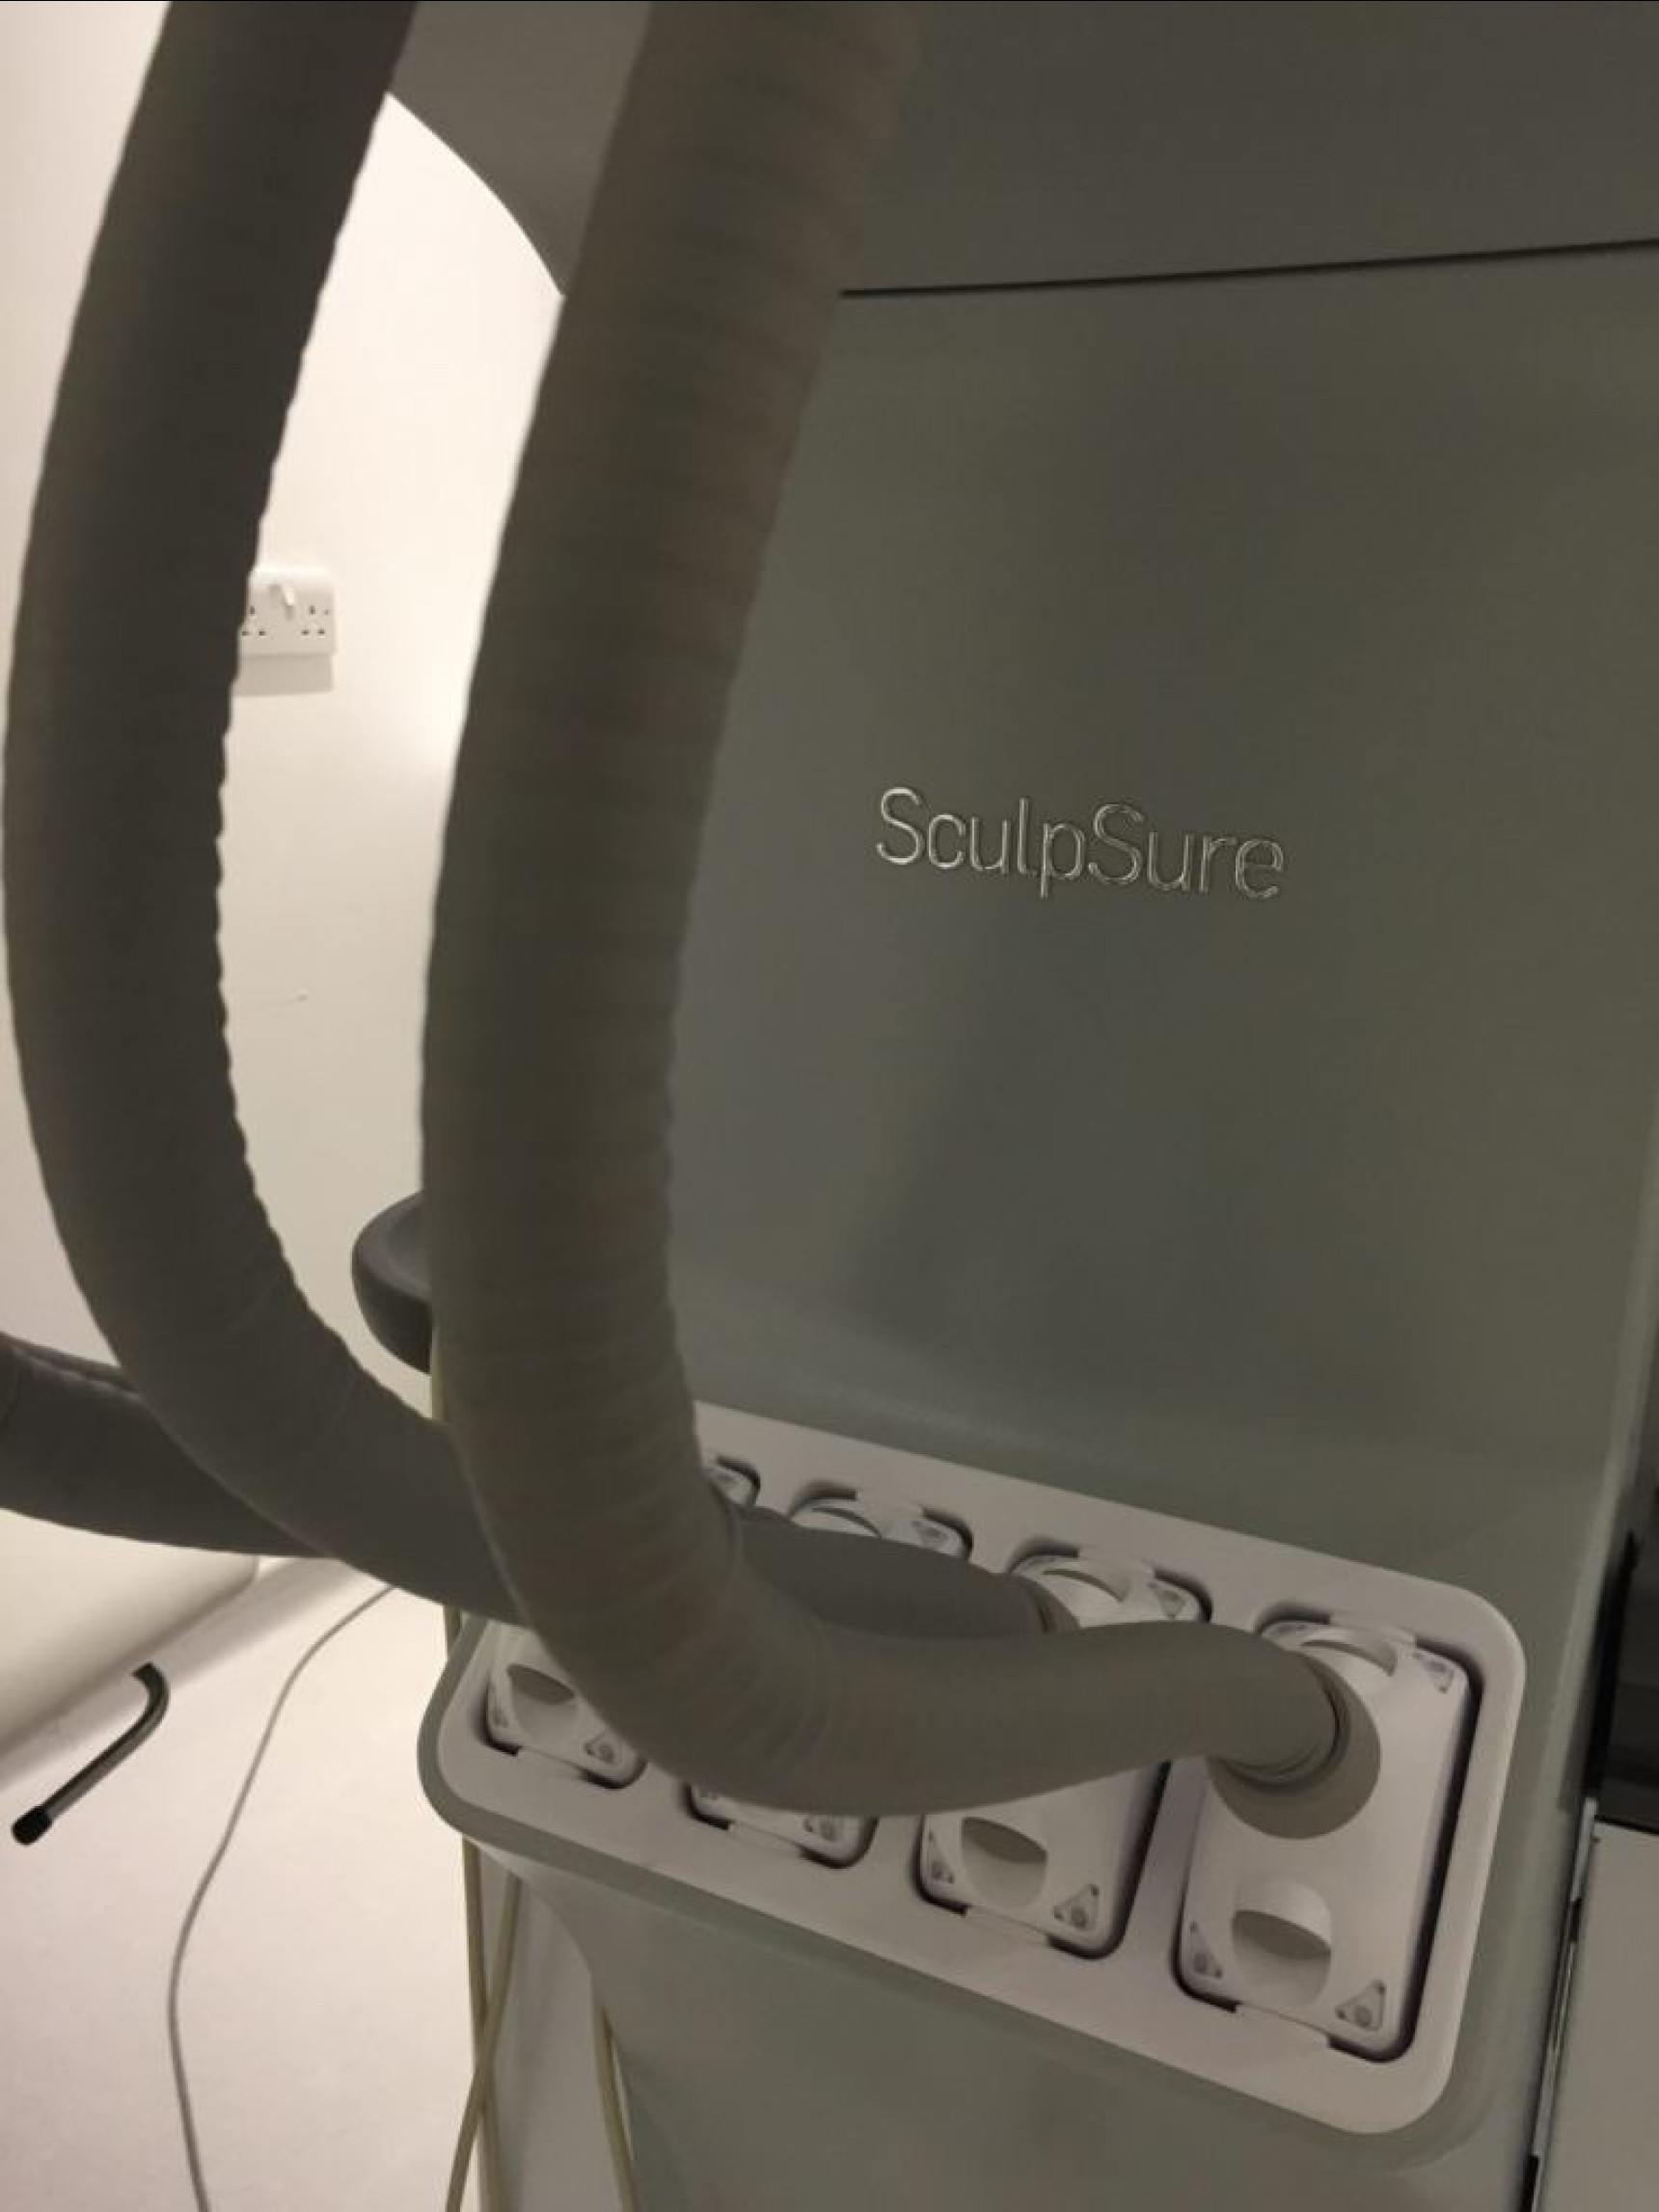 The SculpSure™ laser treatment